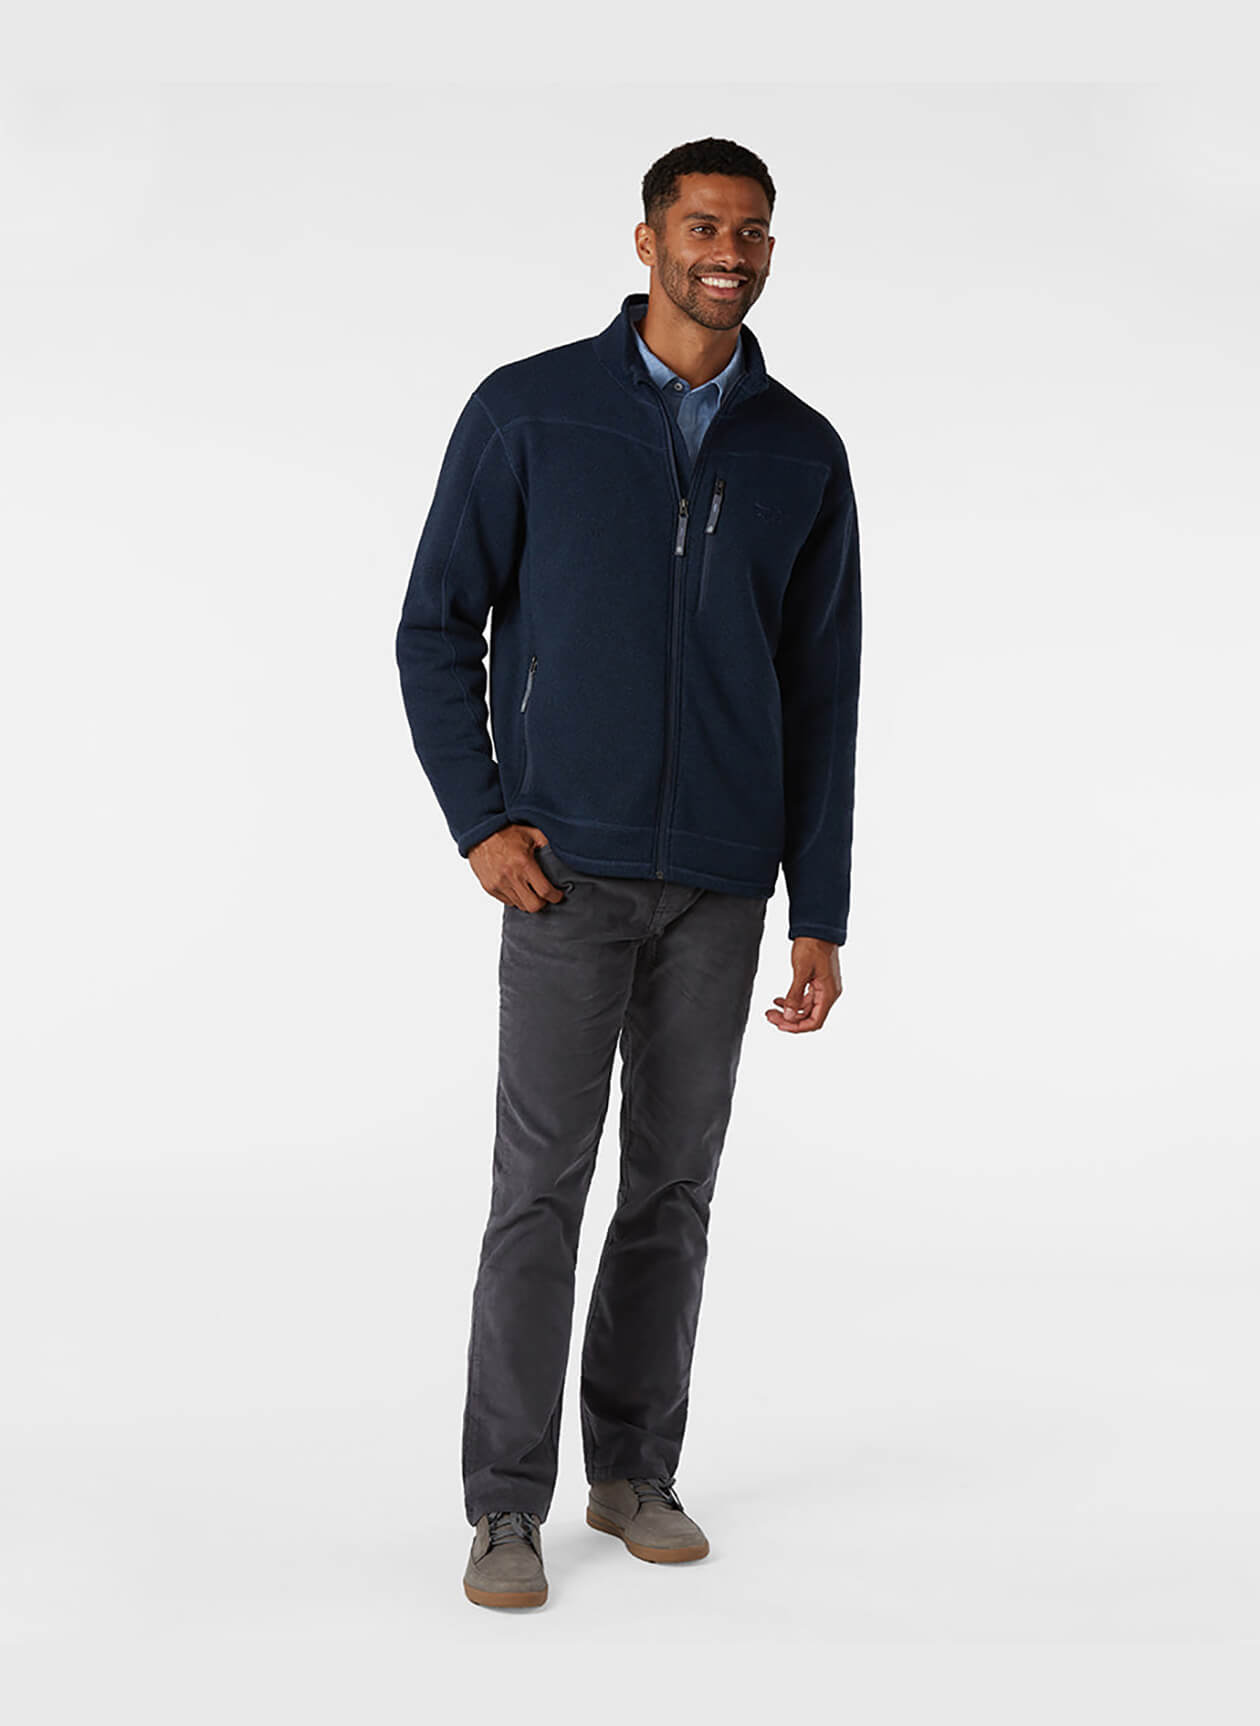 STIO Men's Wilcox Sweater Fleece Jacket, Mountain Shadow